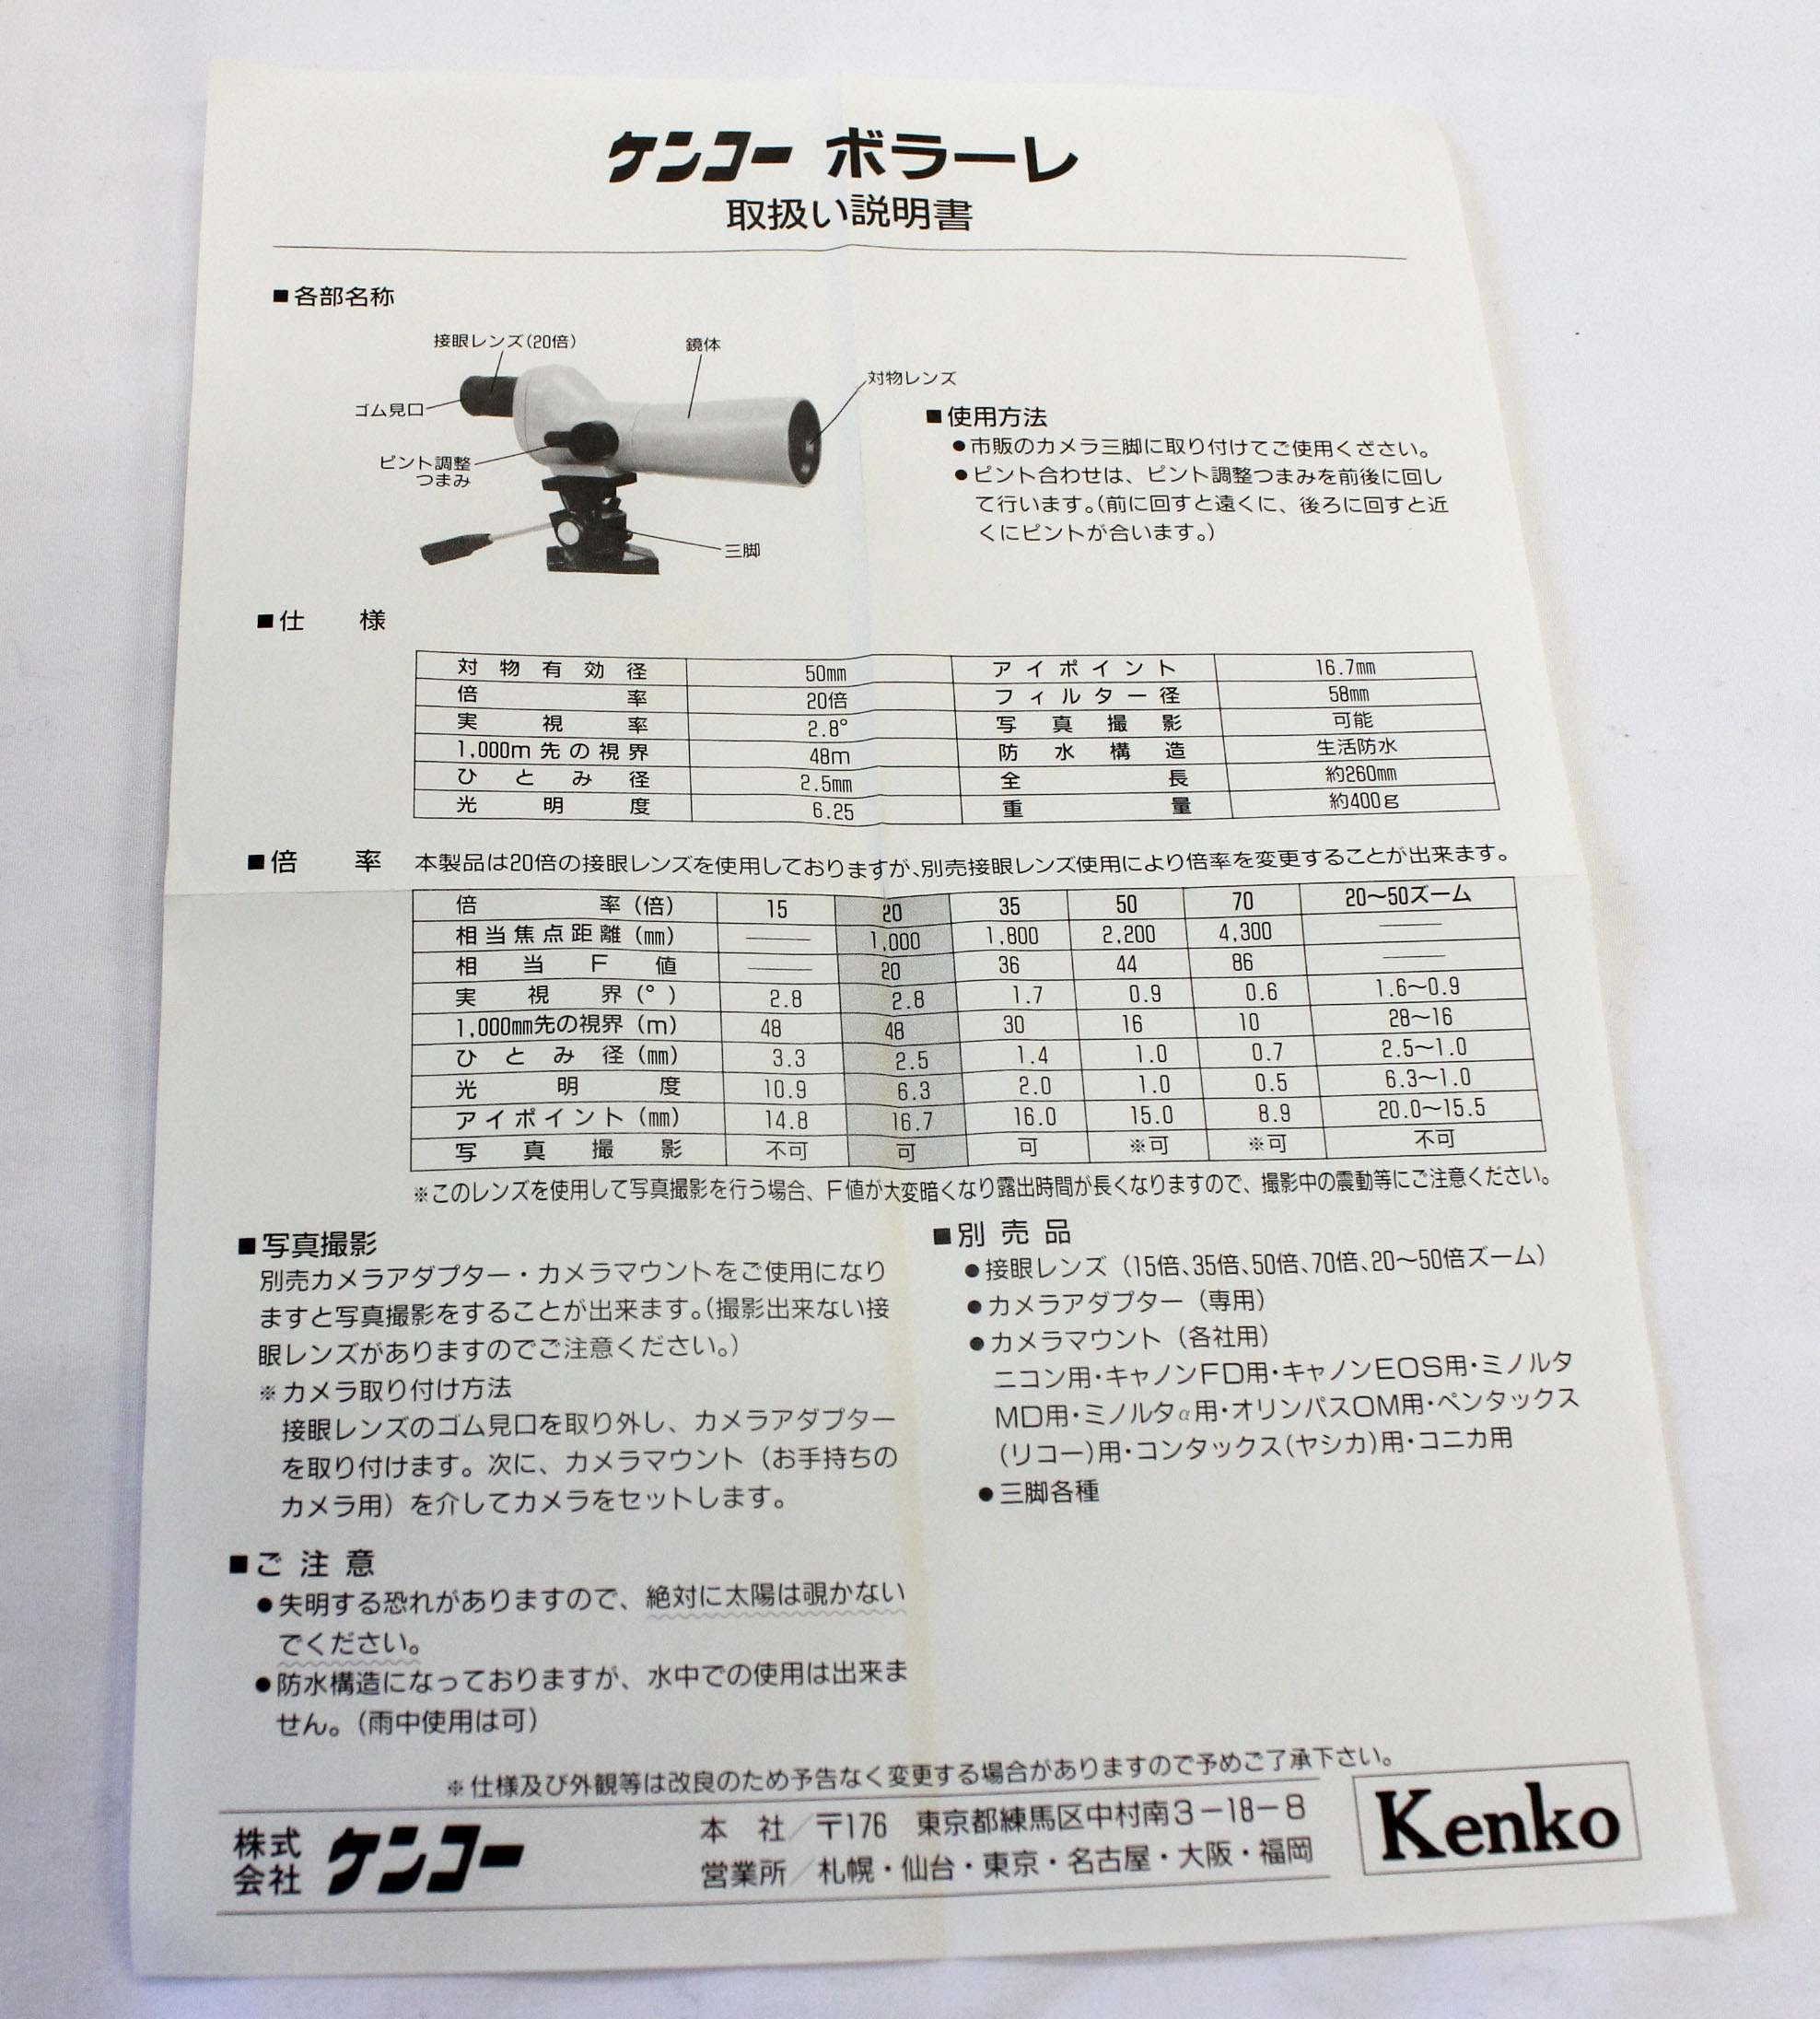  Kenko Volare Spotting Scope 20x D=50 in Case/Box from Japan Photo 12